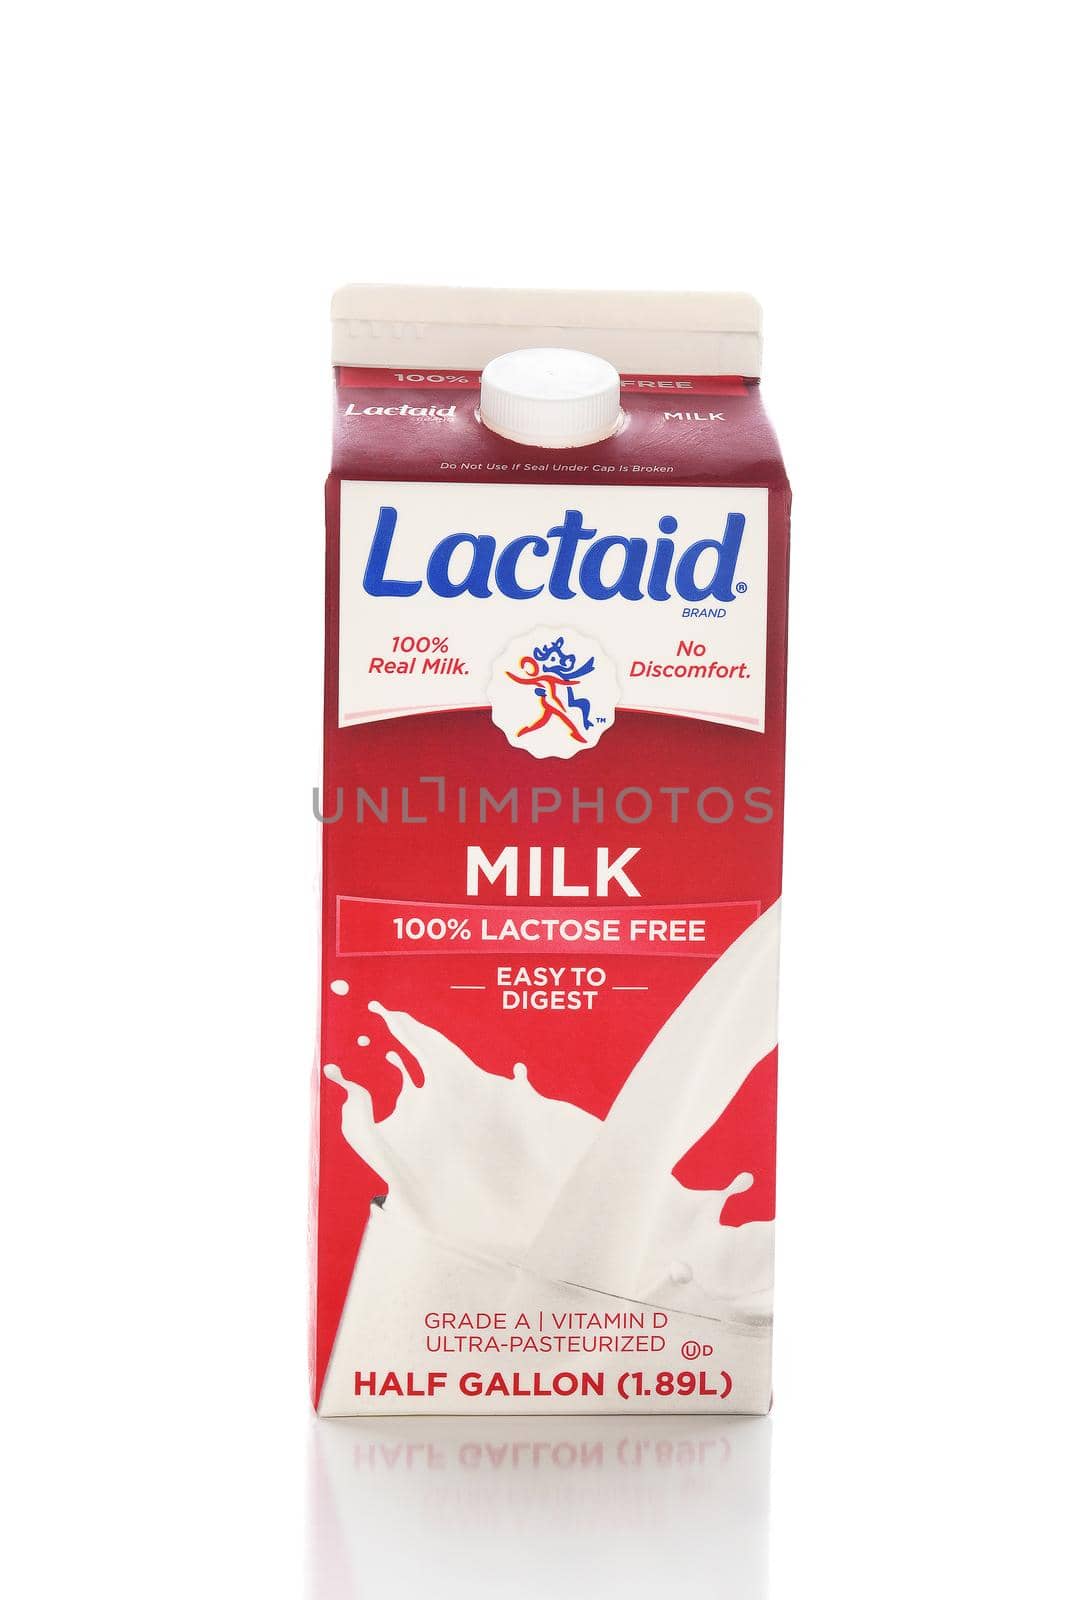 Lactaid Milk by sCukrov